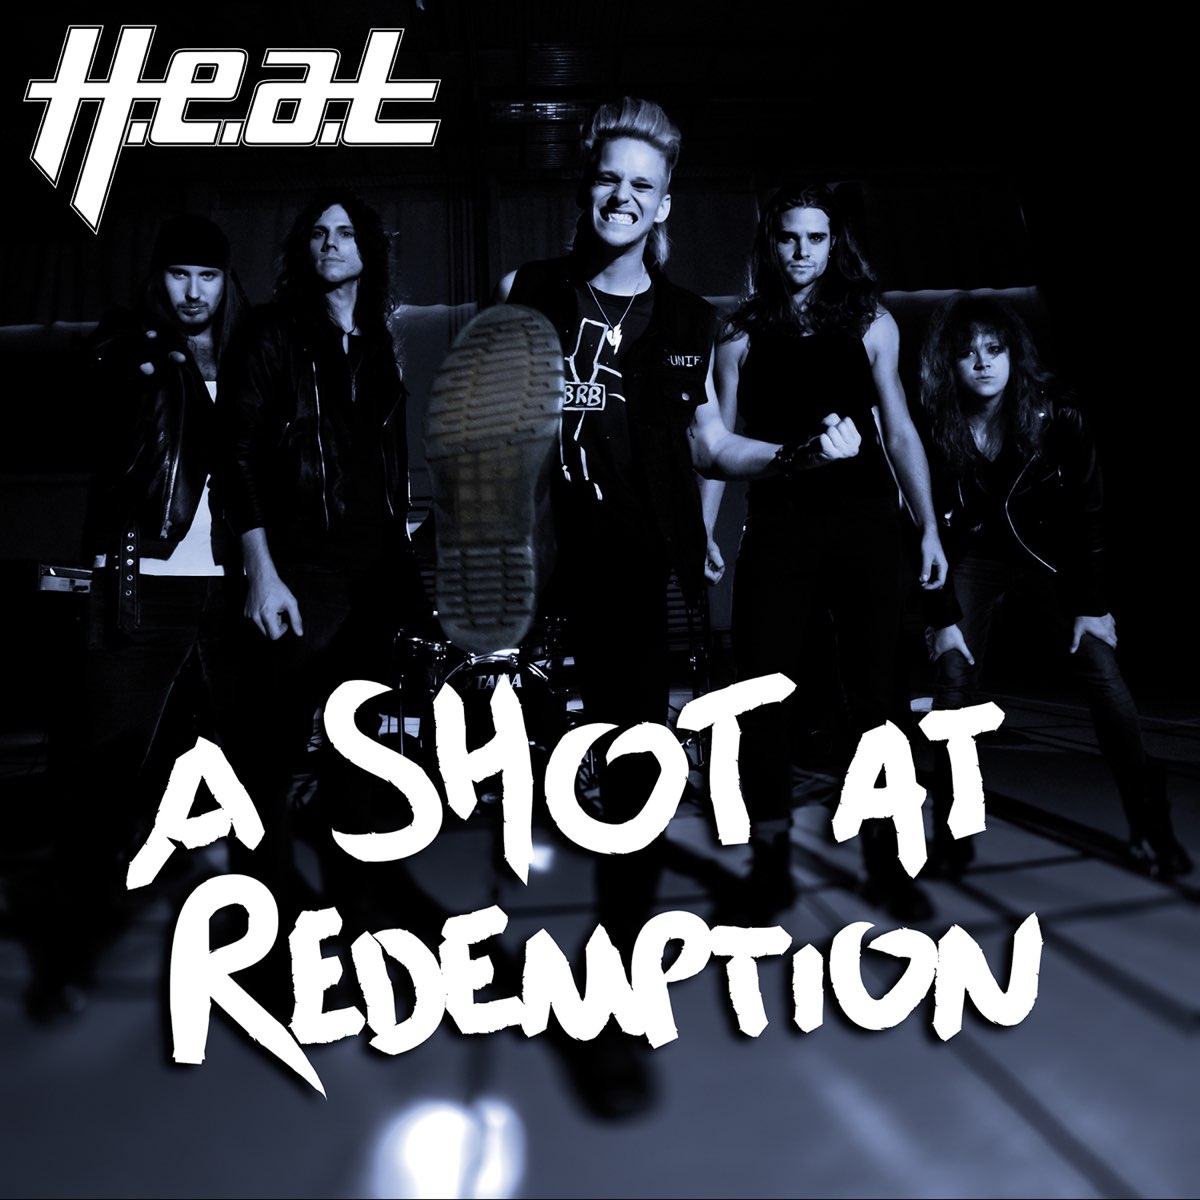 H e a d 1. H.E.A.T 'A shot at Redemption. H.E.A.T шведская рок-группа. Redemption аккорды. H.E.A.T - tearing down the Walls (2014).